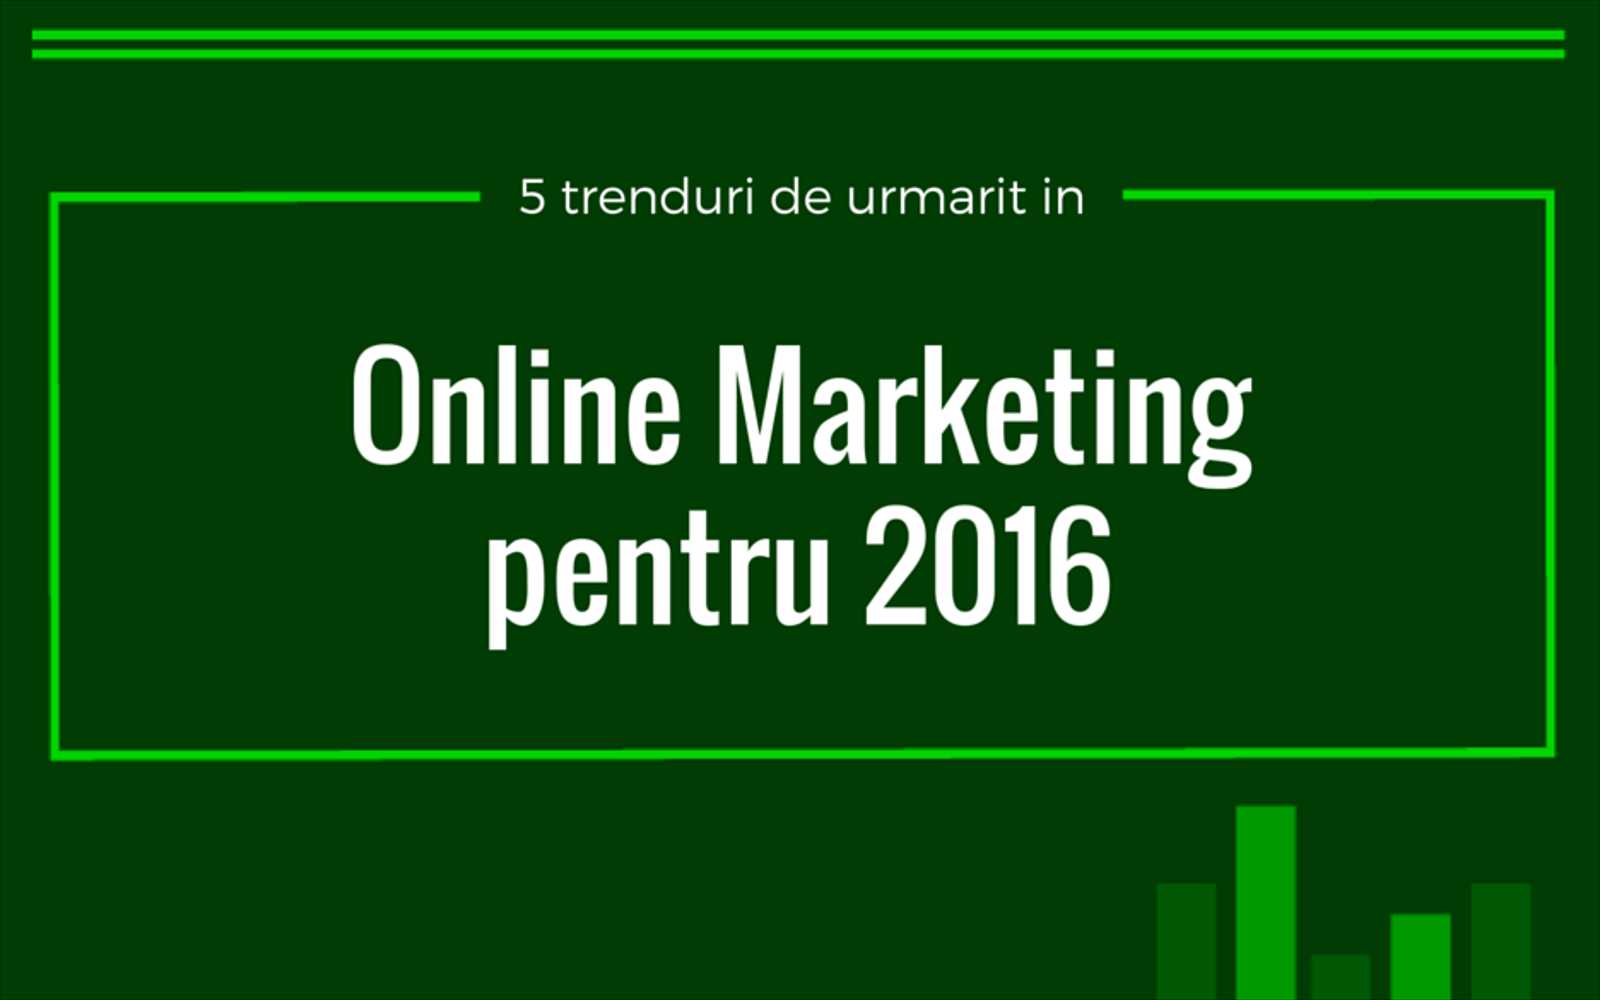 5 trenduri de urmarit in online marketing pentru 2016